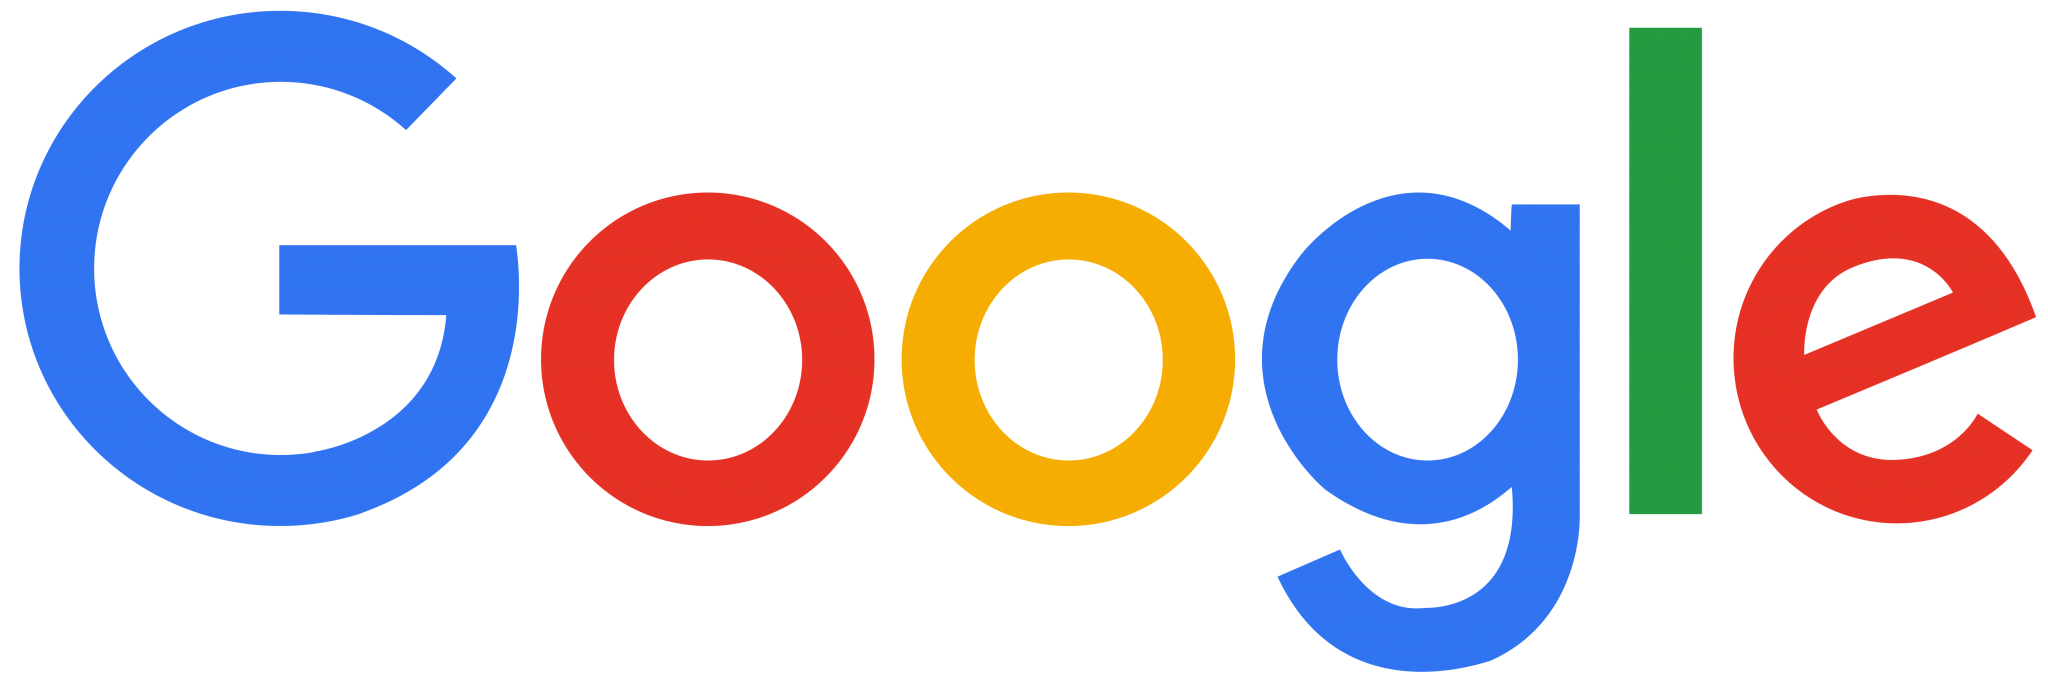 google-logo-png-hd-11-2048x683